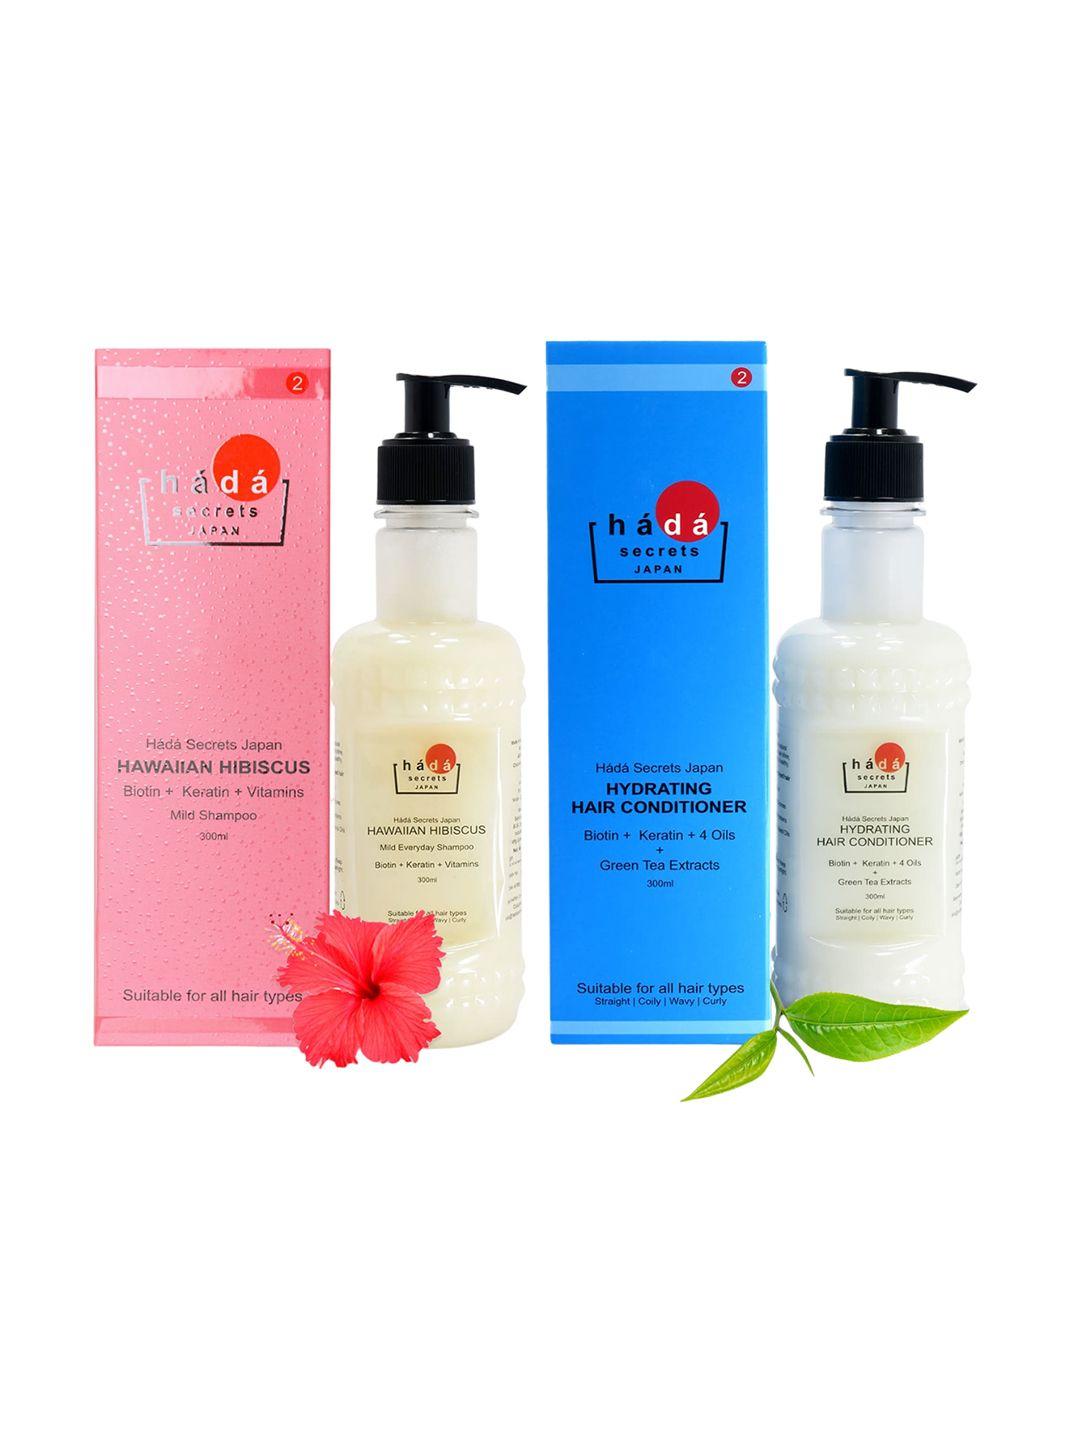 hada secrets japan set of 2 hawaiian hibiscus shampoo & hydrating hair conditioner 600ml